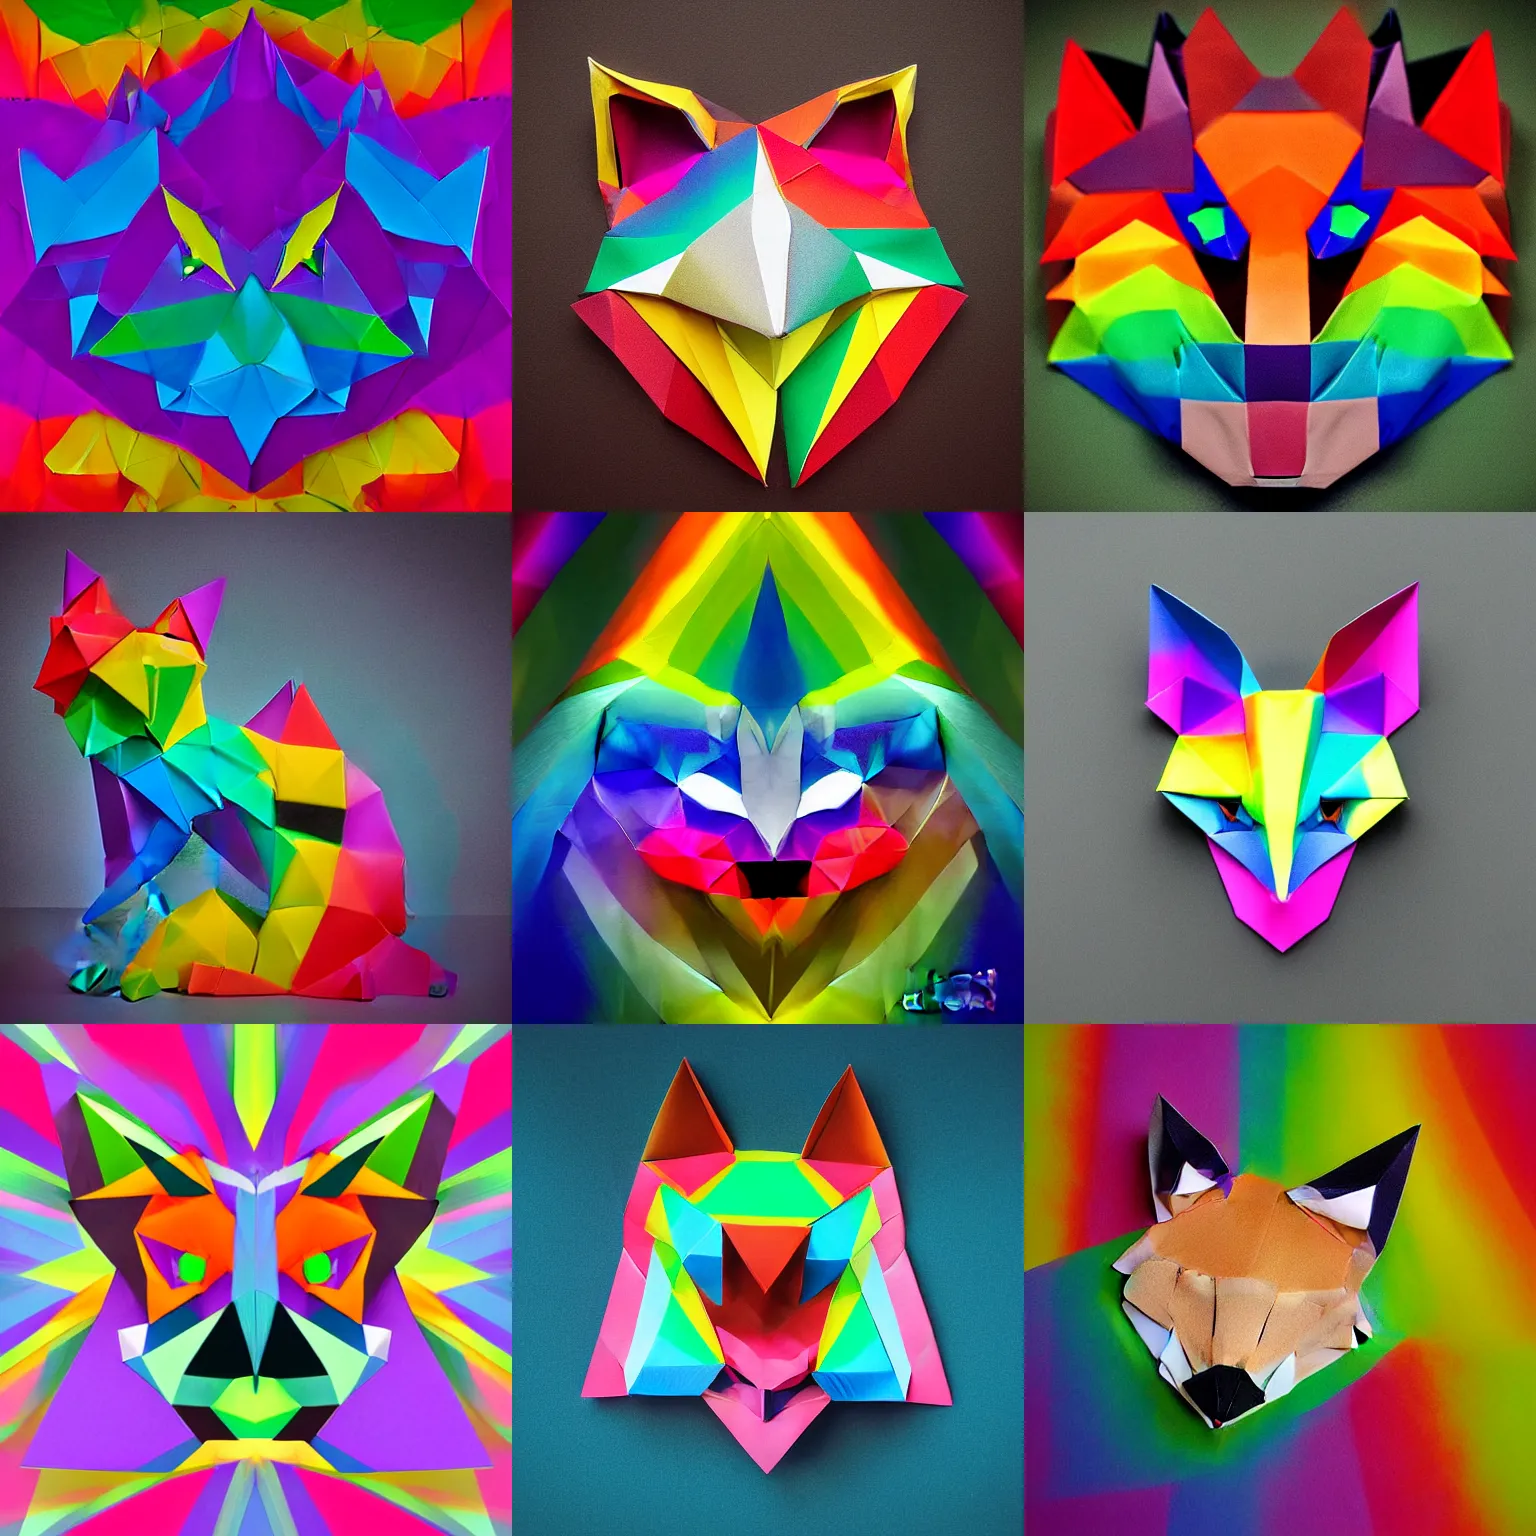 Prompt: evil fox face rainbow origami studio photograph symmetrical